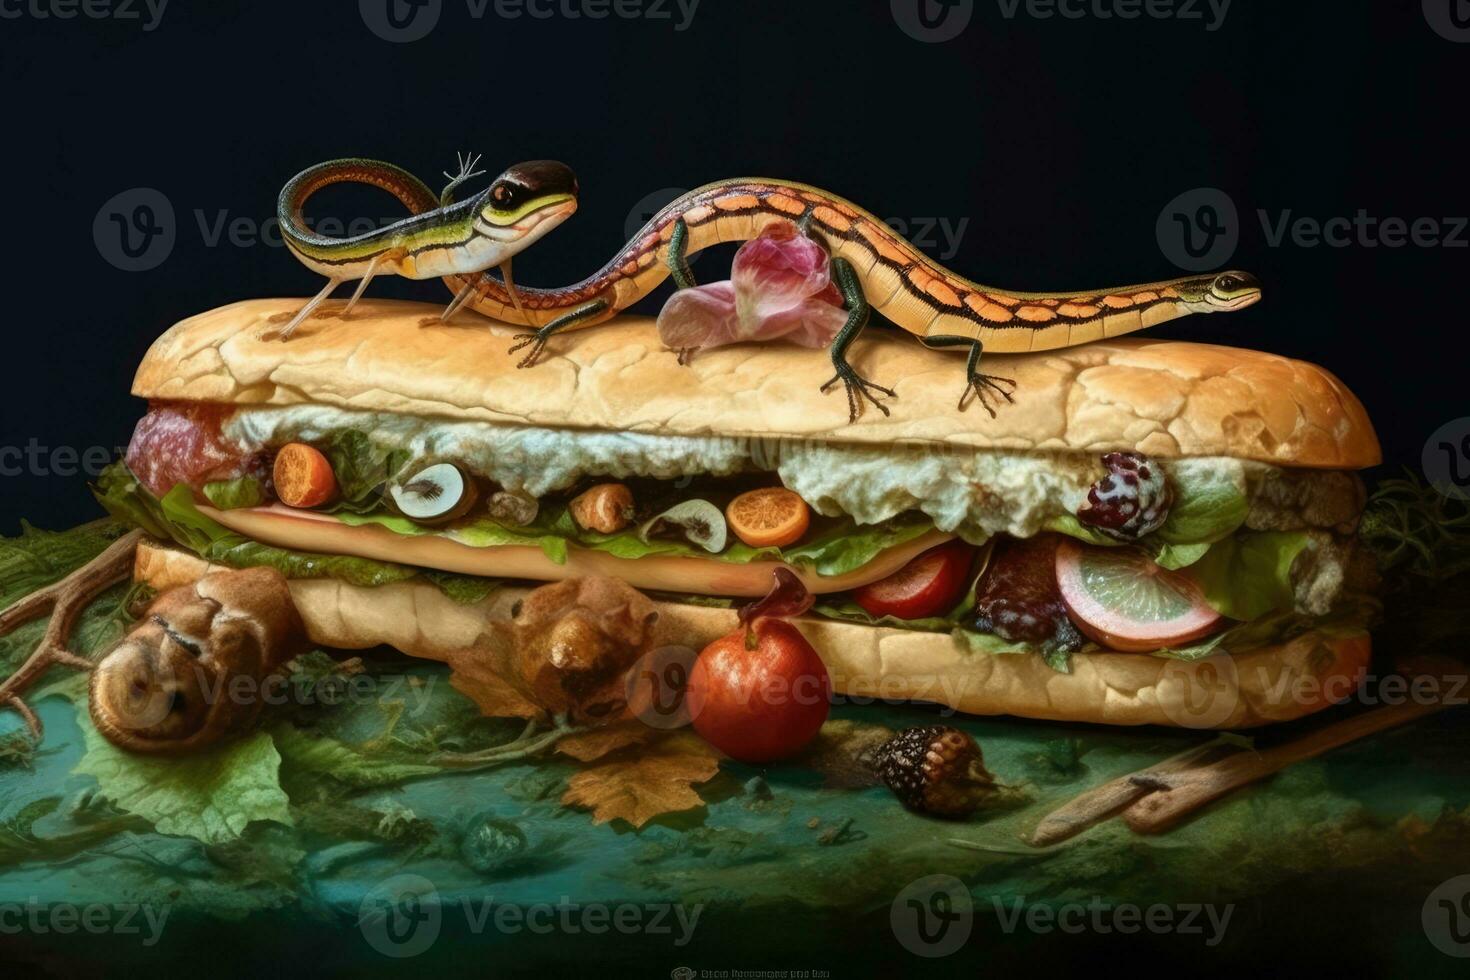 das ultimativ Sandwich foto